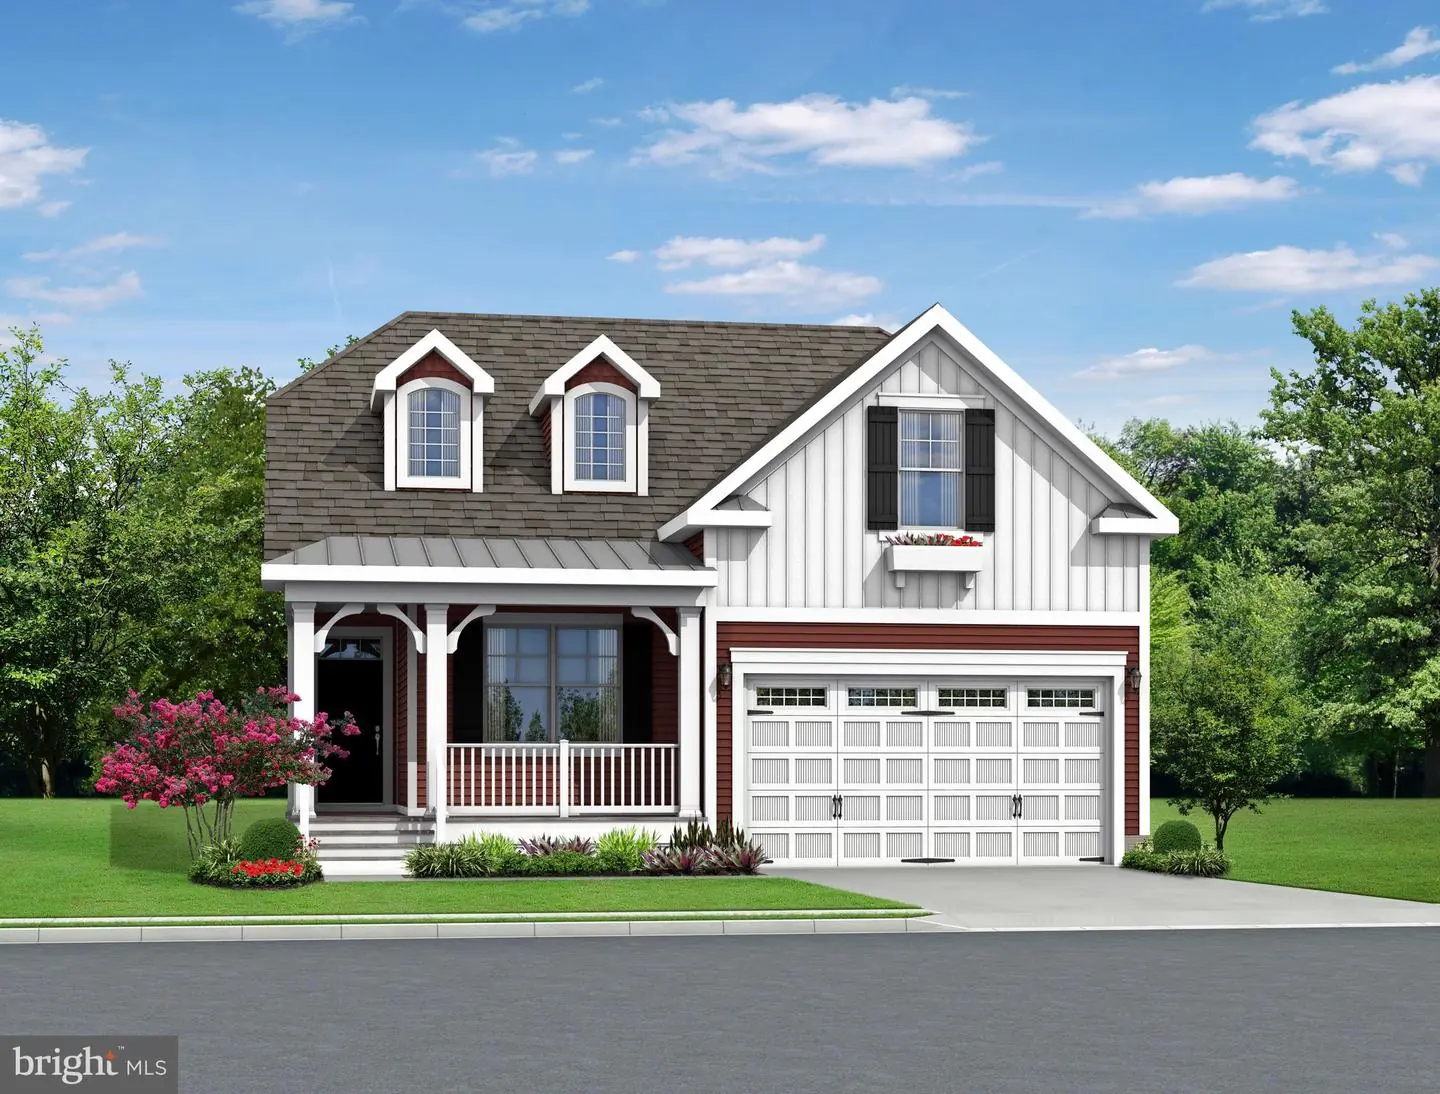 DESU2031440-801988062140-2022-11-02-11-01-29 Iris To-be-built Home Tbd | Millsboro, DE Real Estate For Sale | MLS# Desu2031440  - Lisa Mathena Real Estate